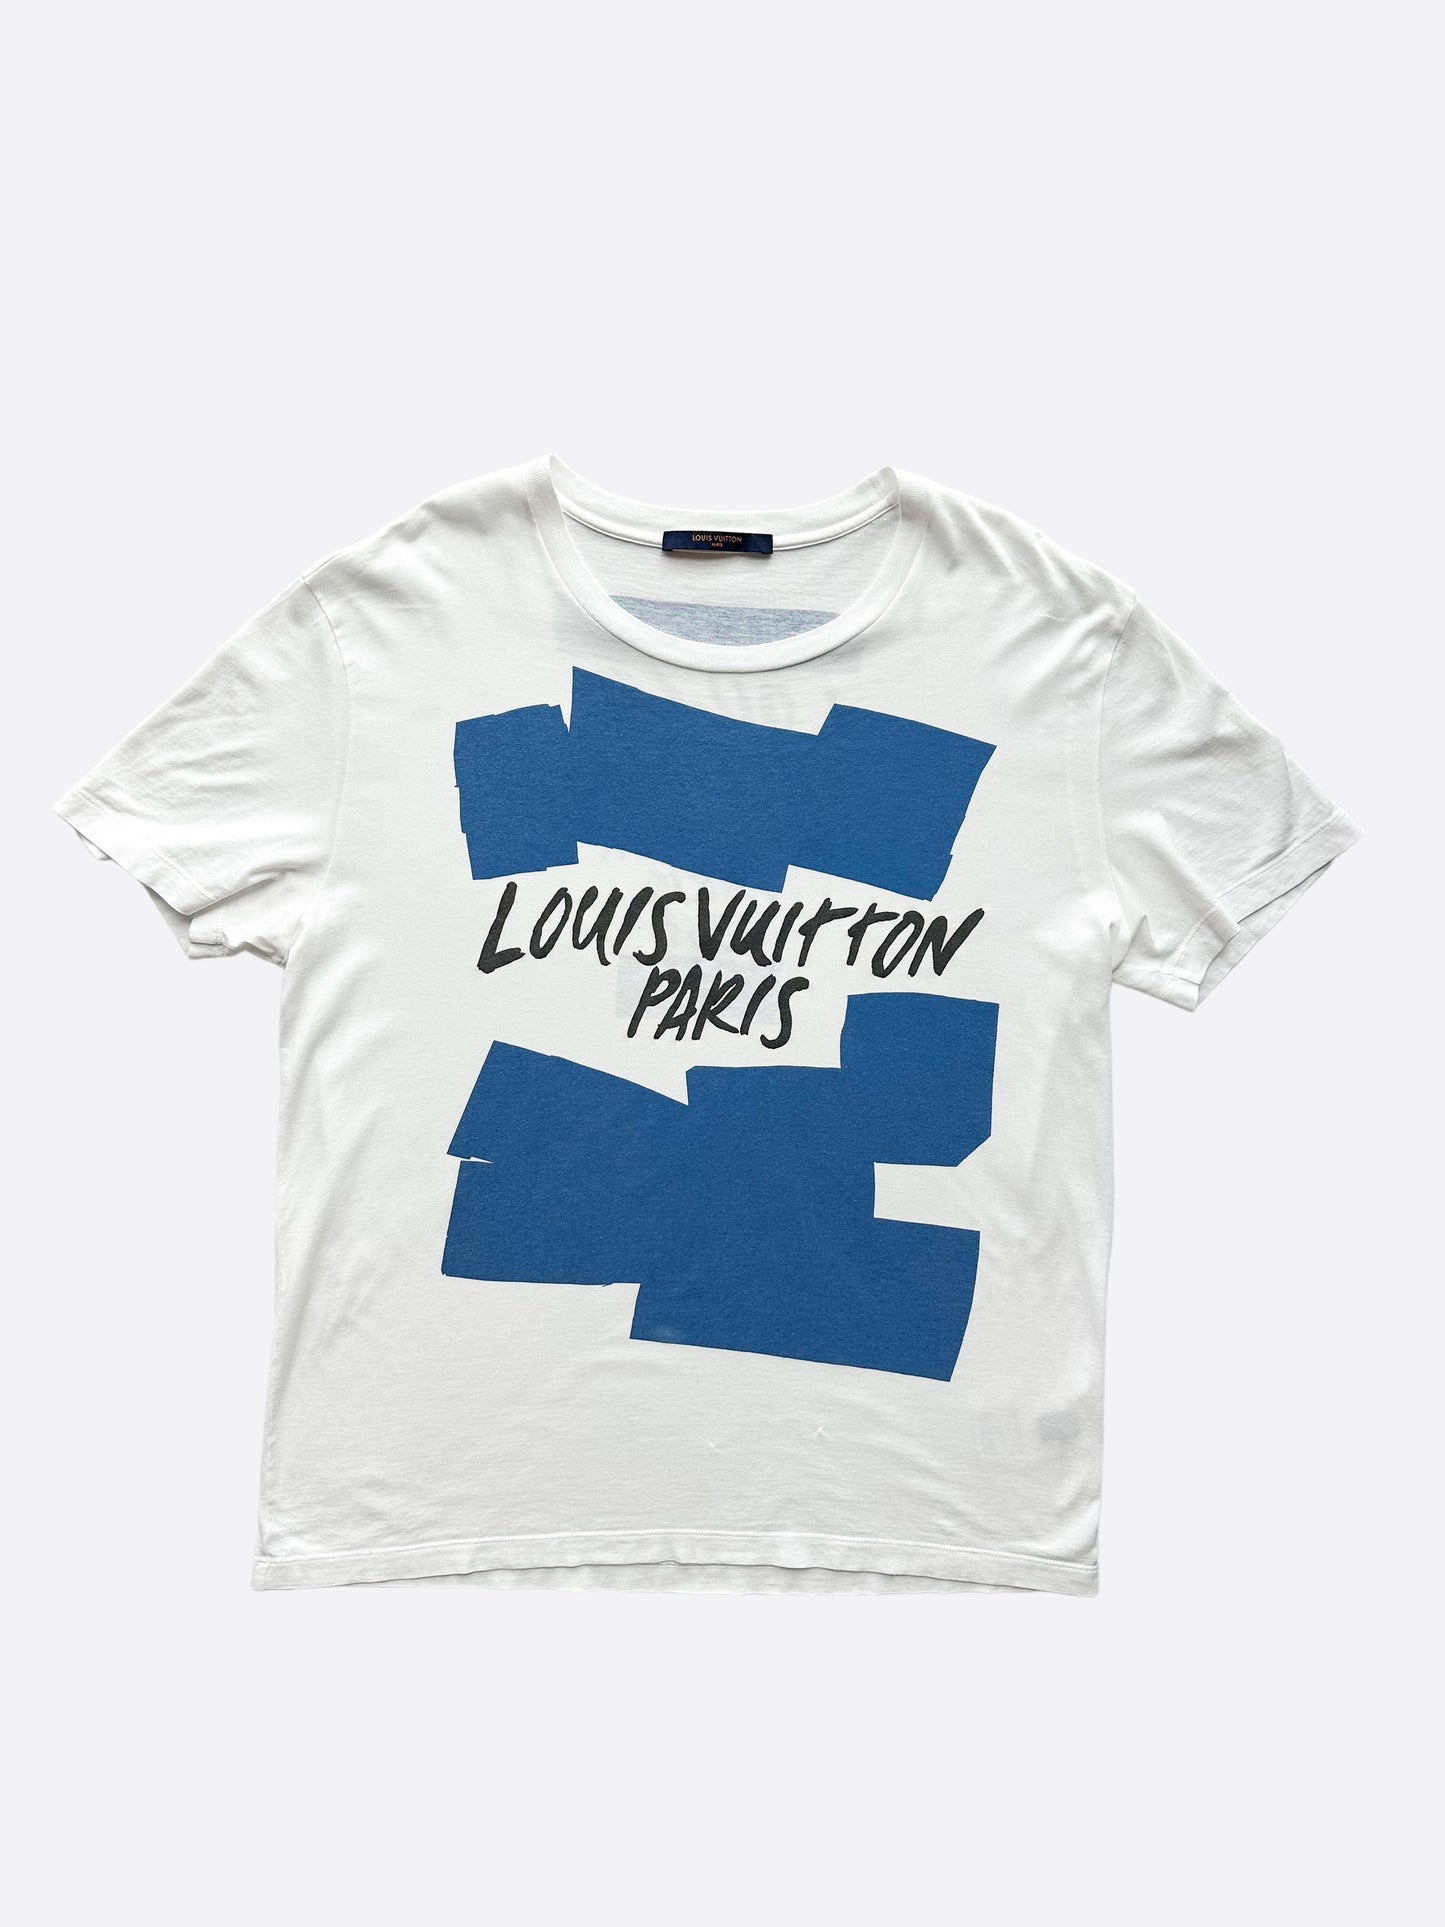 EPPLI, LOUIS VUITTON T-Shirt, Gr. M.